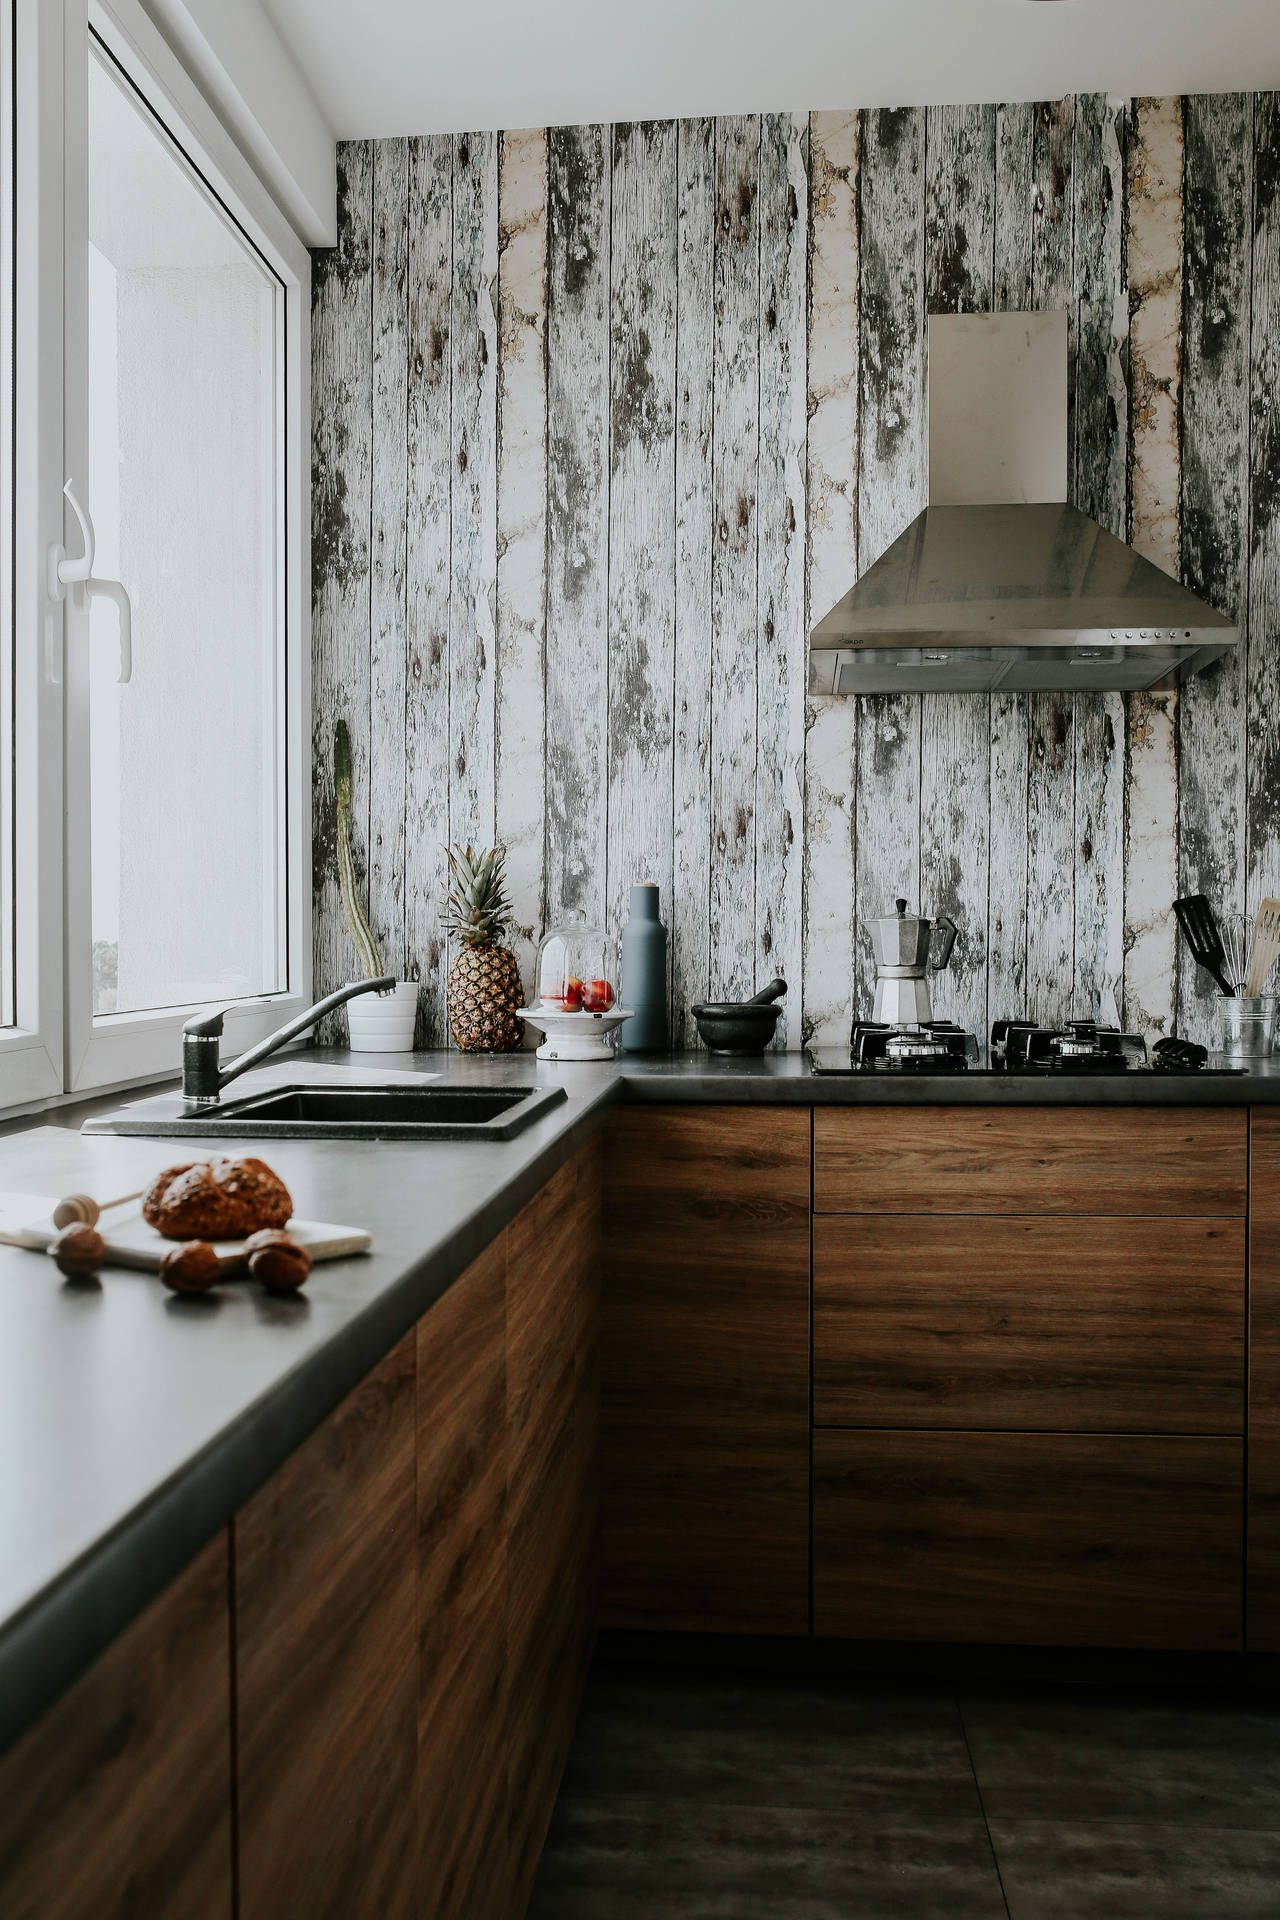 Kitchen Design With Wooden Walls Wallpaper